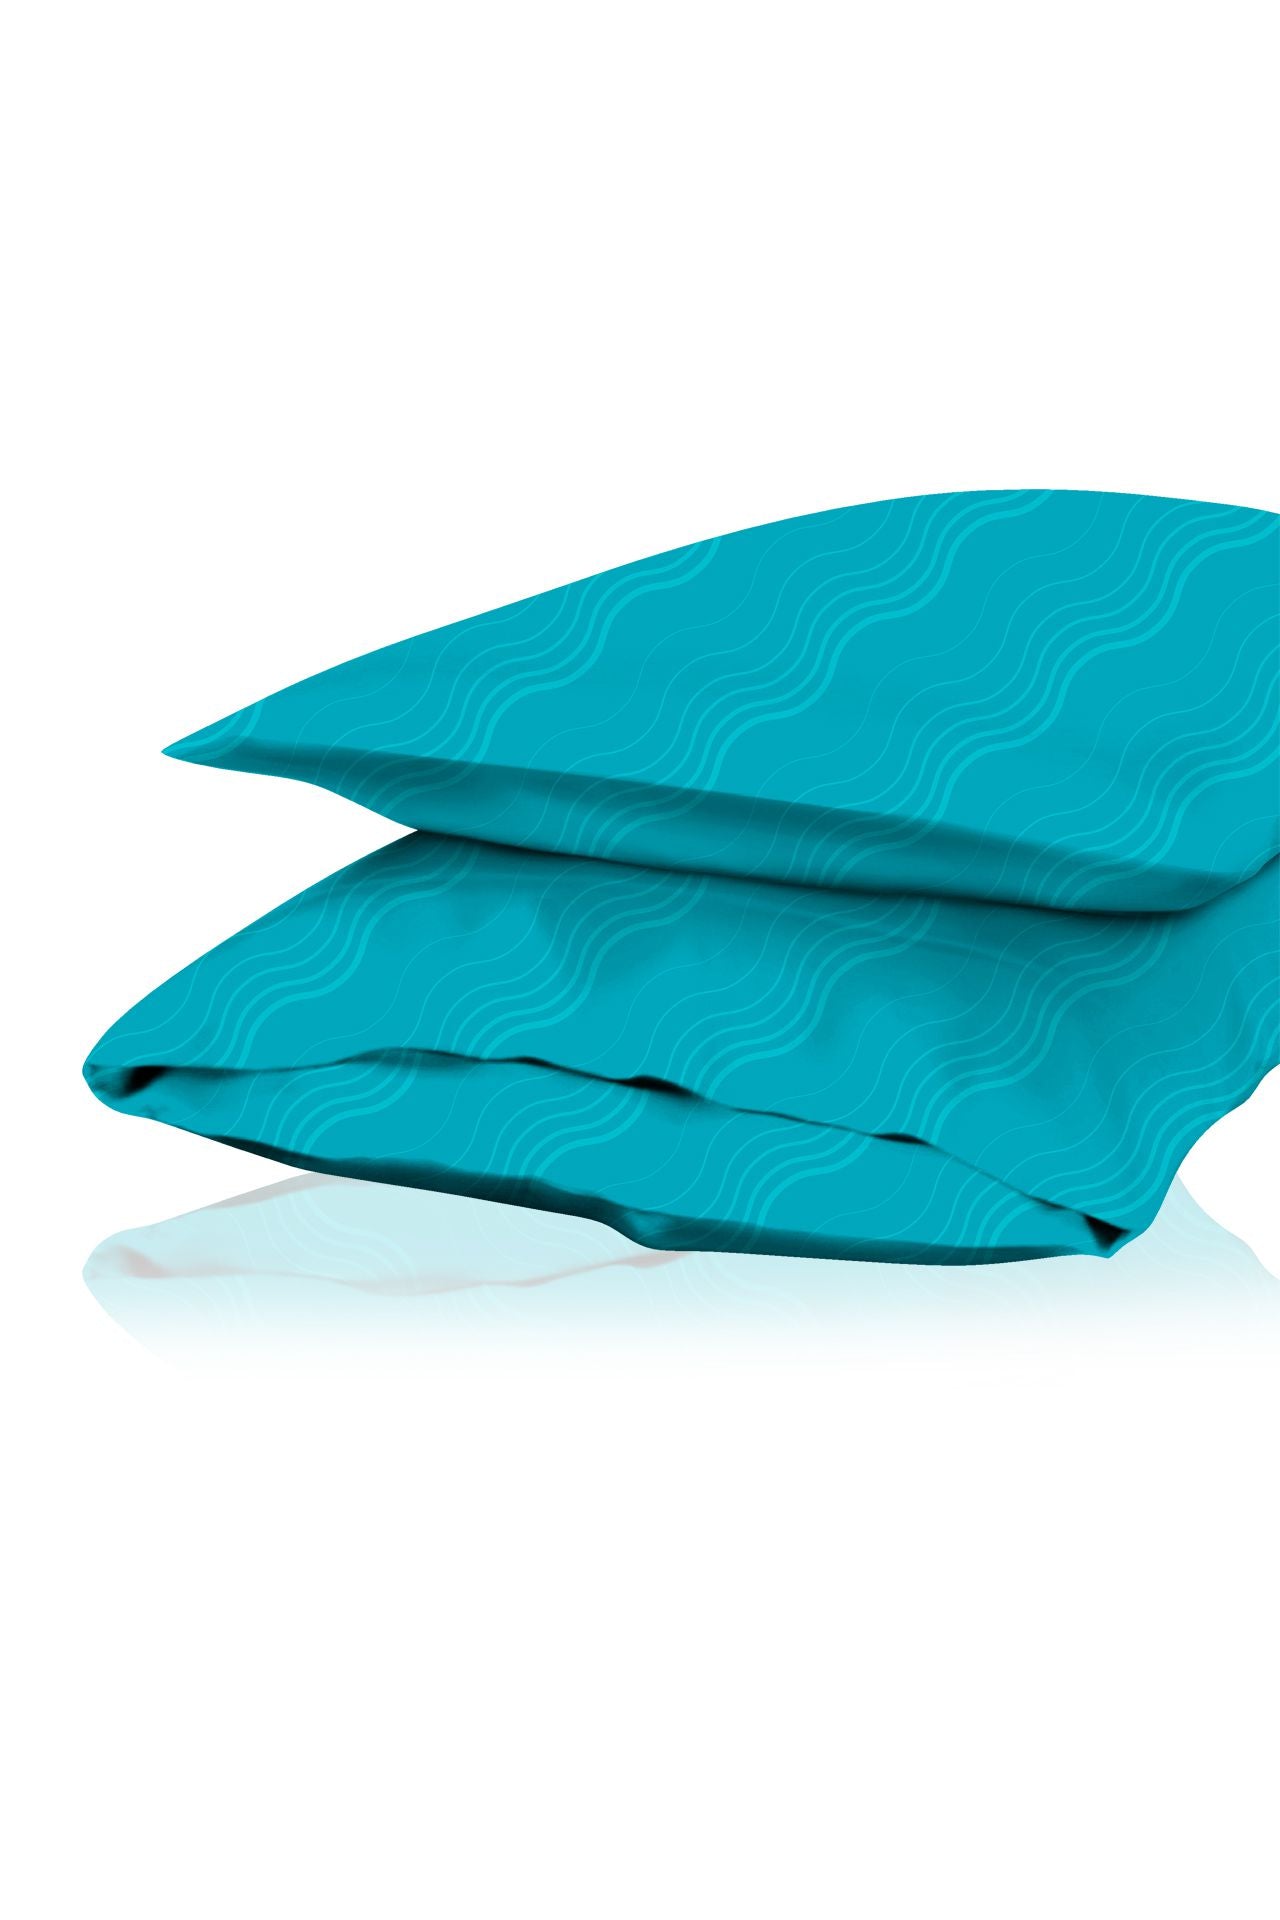 "printed throw pillows" "Kyle X Shahida" "washable throw pillows" "light blue pillow covers"